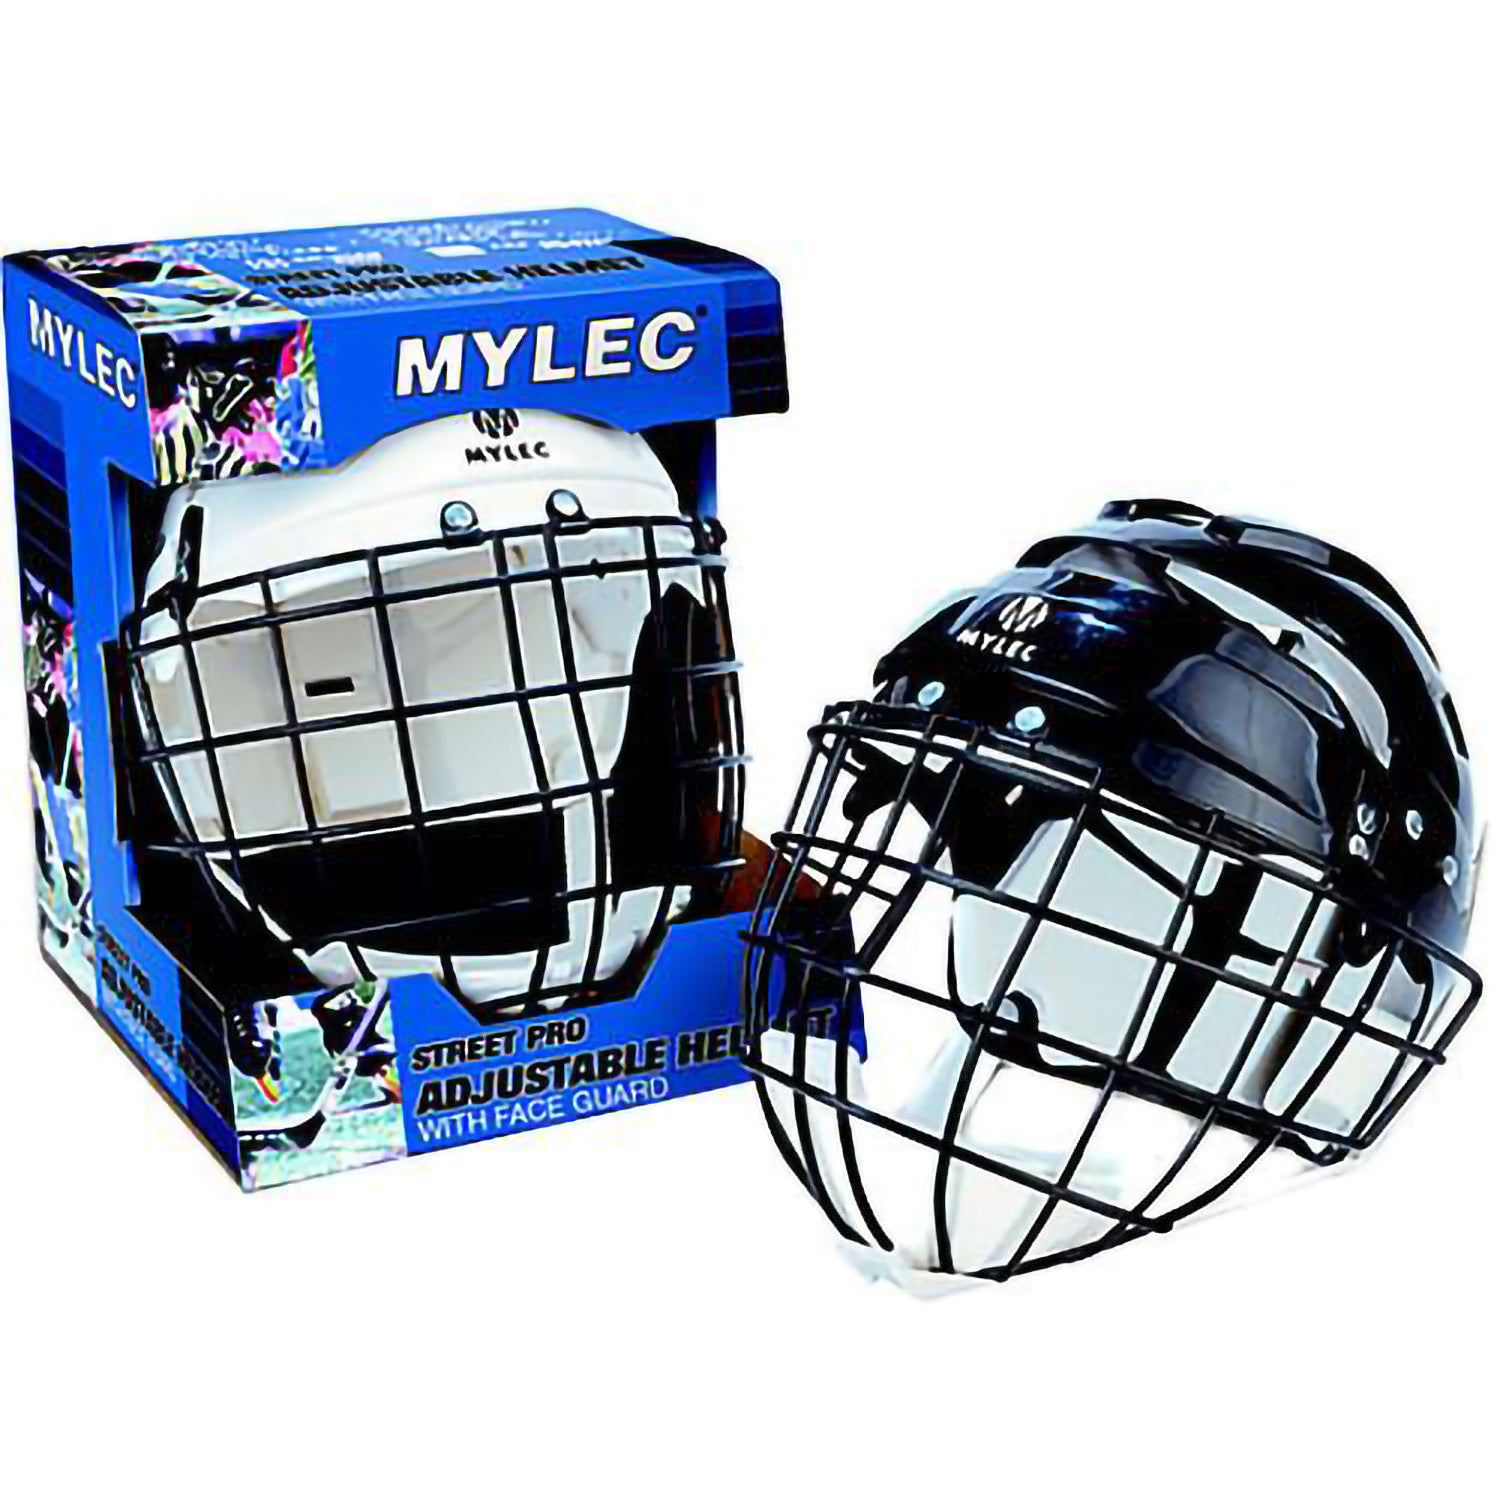 MK1 Hockey Senior Player Helmet with Face Guard Mask - Black - Pro-Distributing